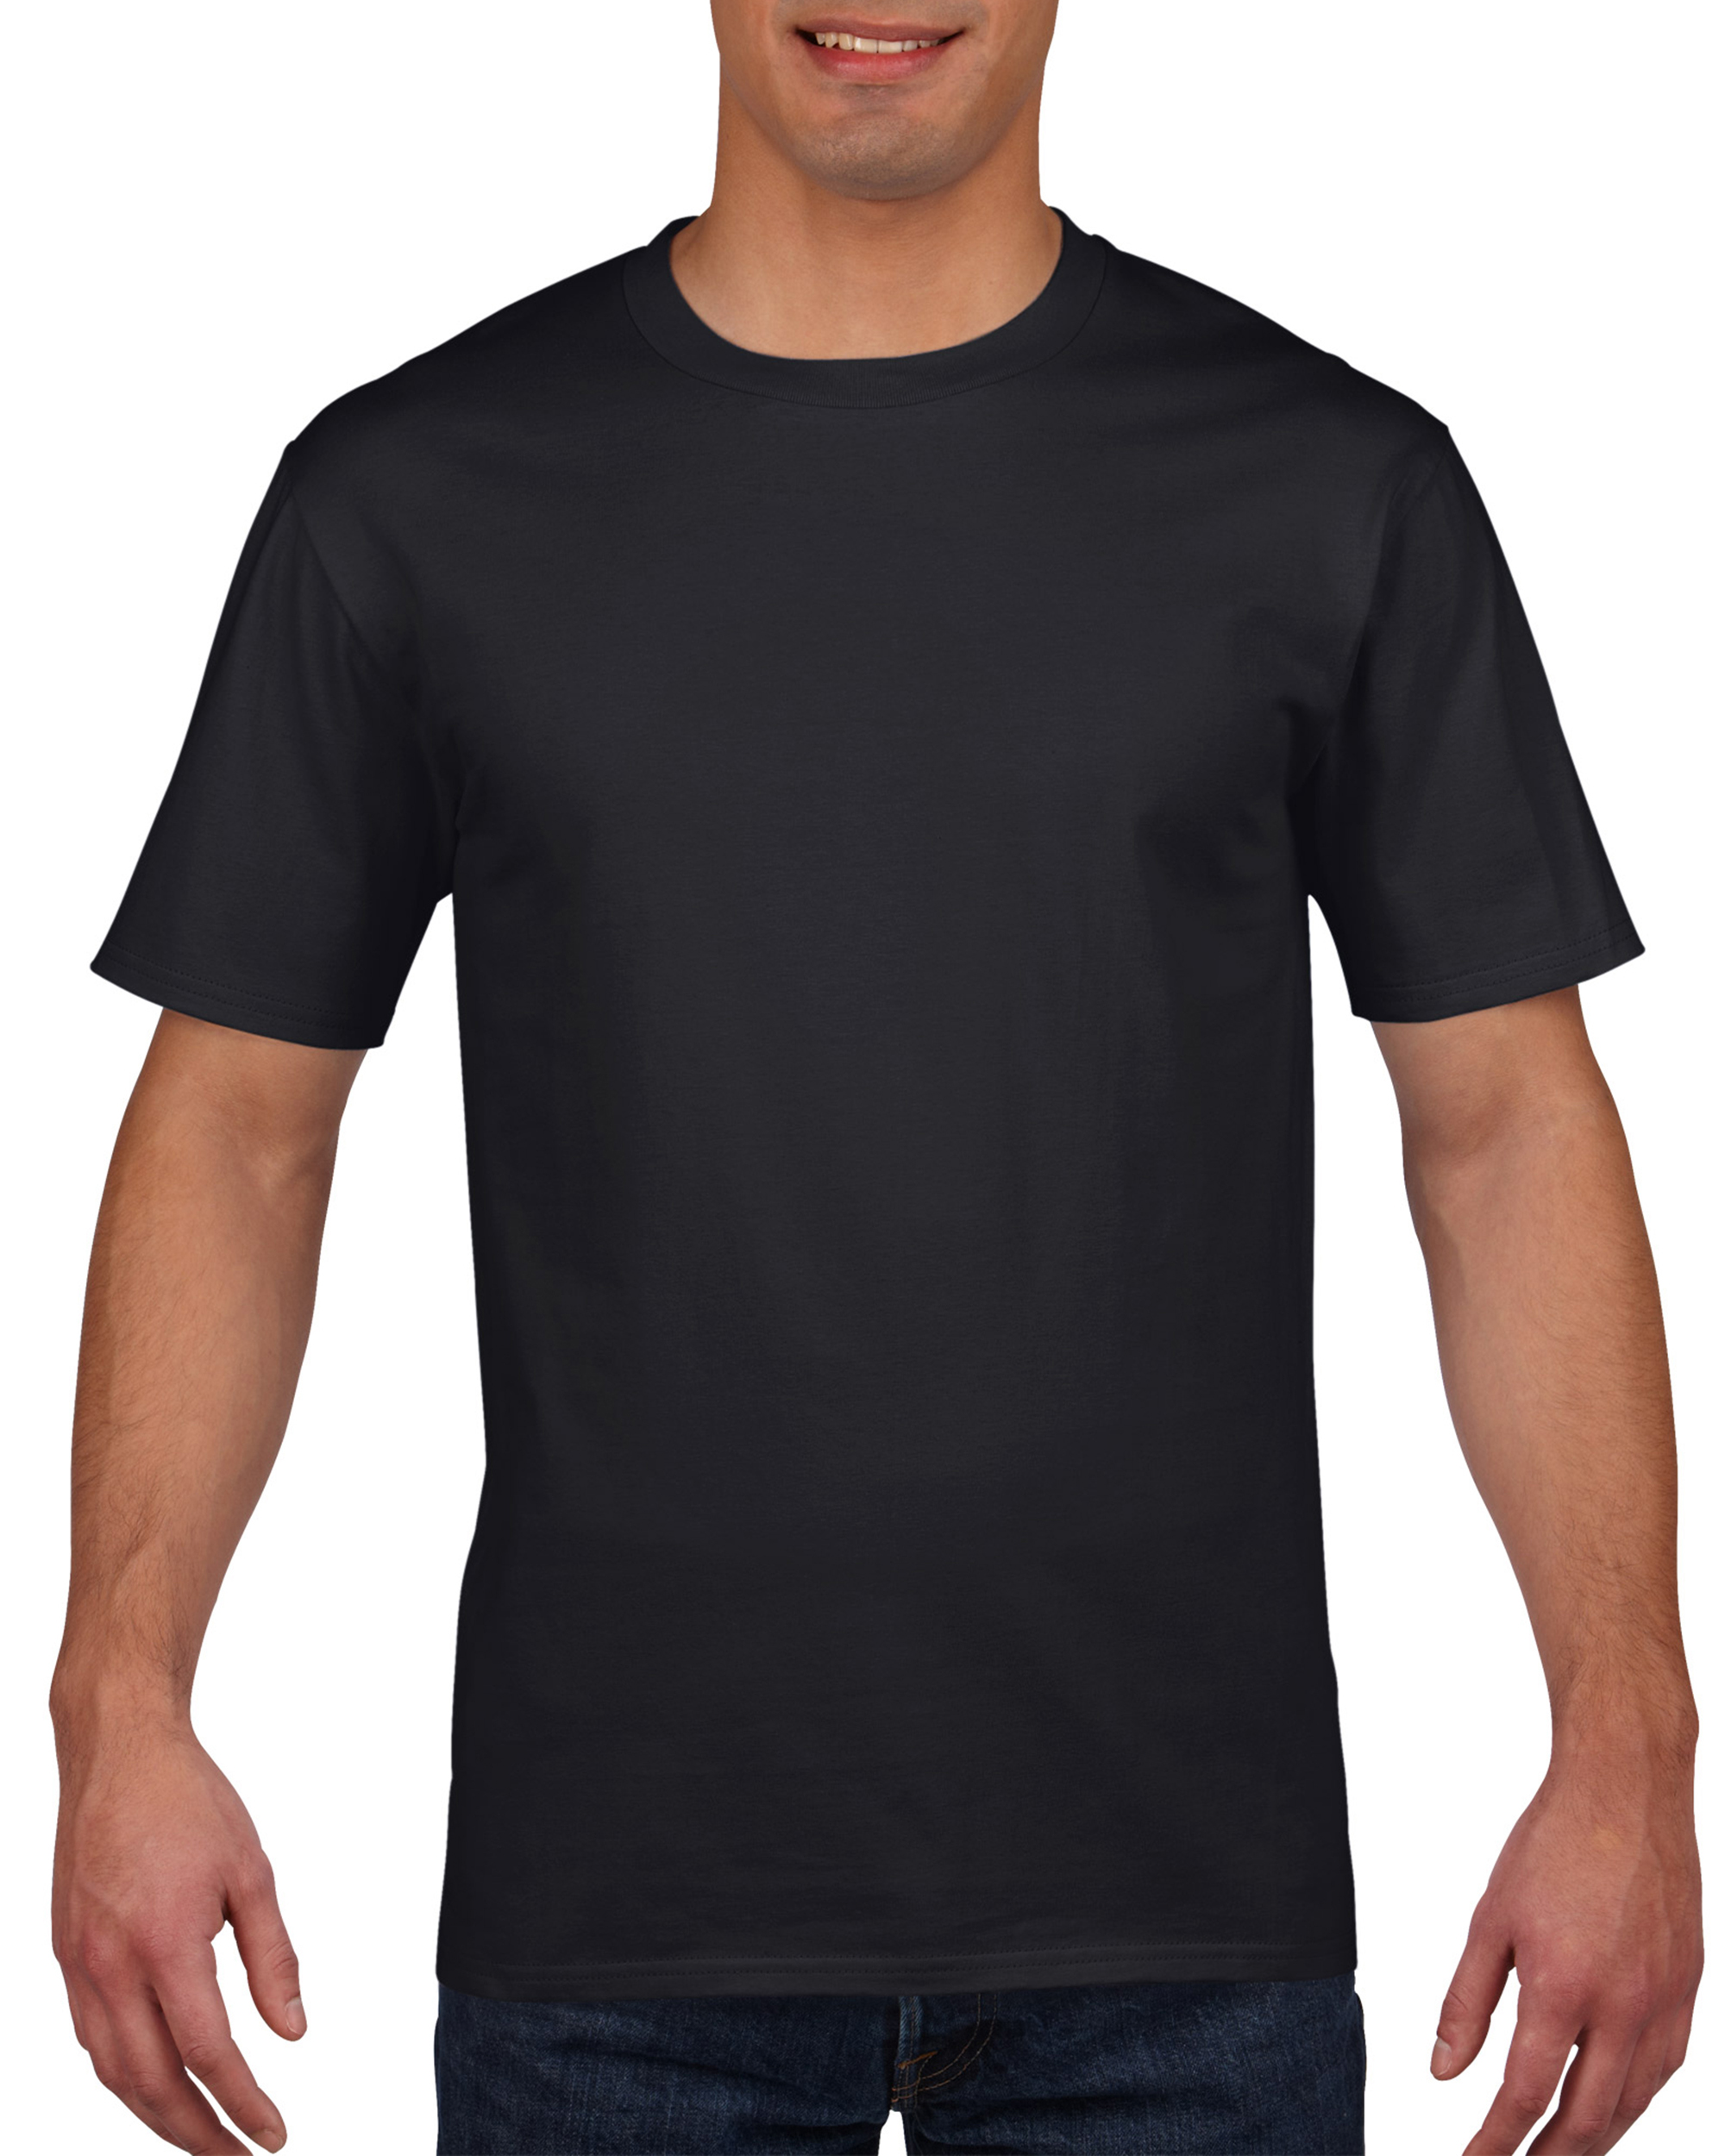 Gildan Mens Womens Premium Softstyle Ringspun Plain Cotton T-Shirt Tee Tshirt